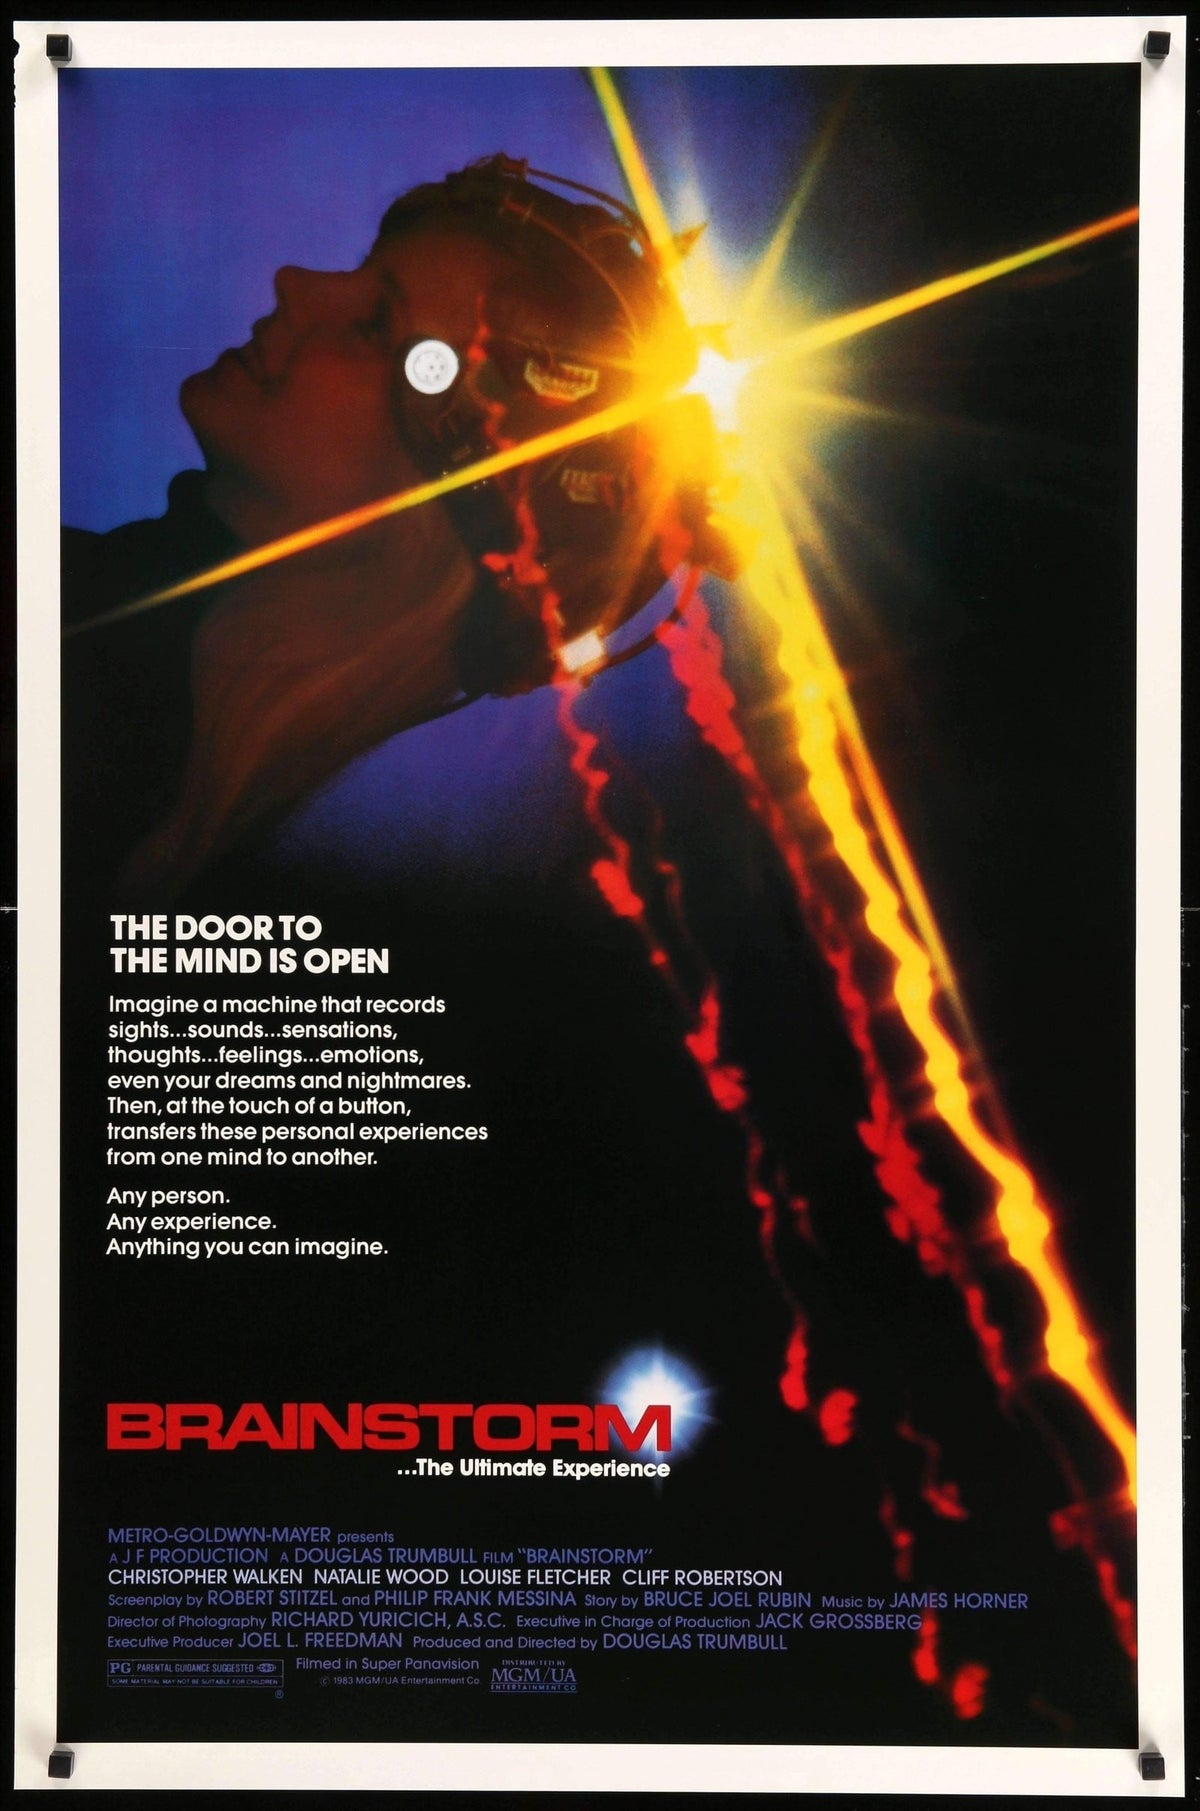 Brainstorm (1983) original movie poster for sale at Original Film Art